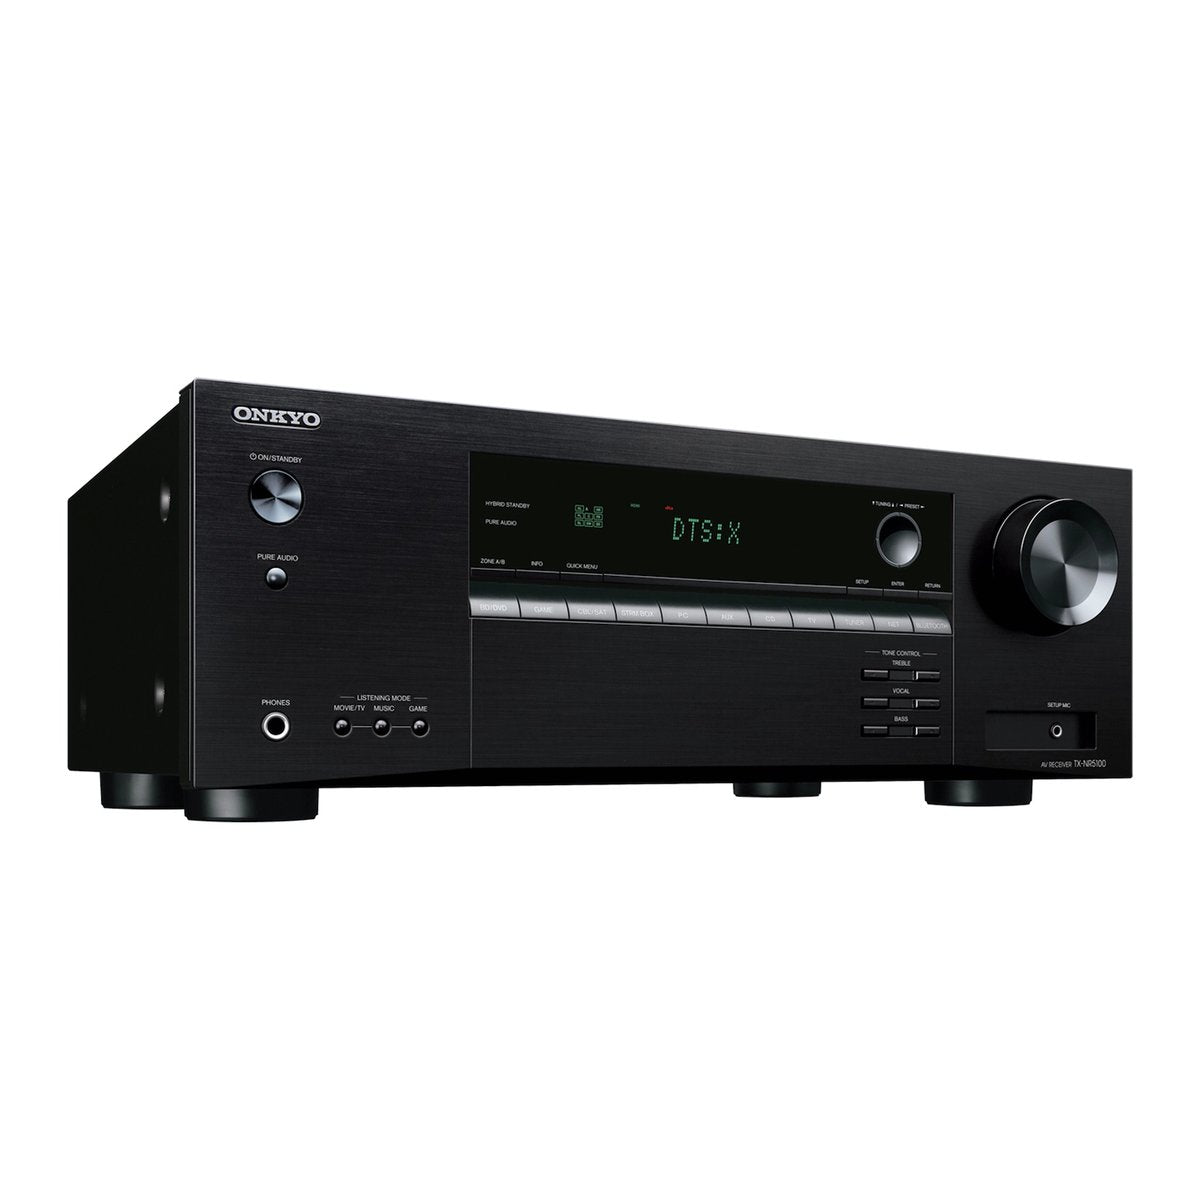 Onkyo TX-NR5100B surround receiver